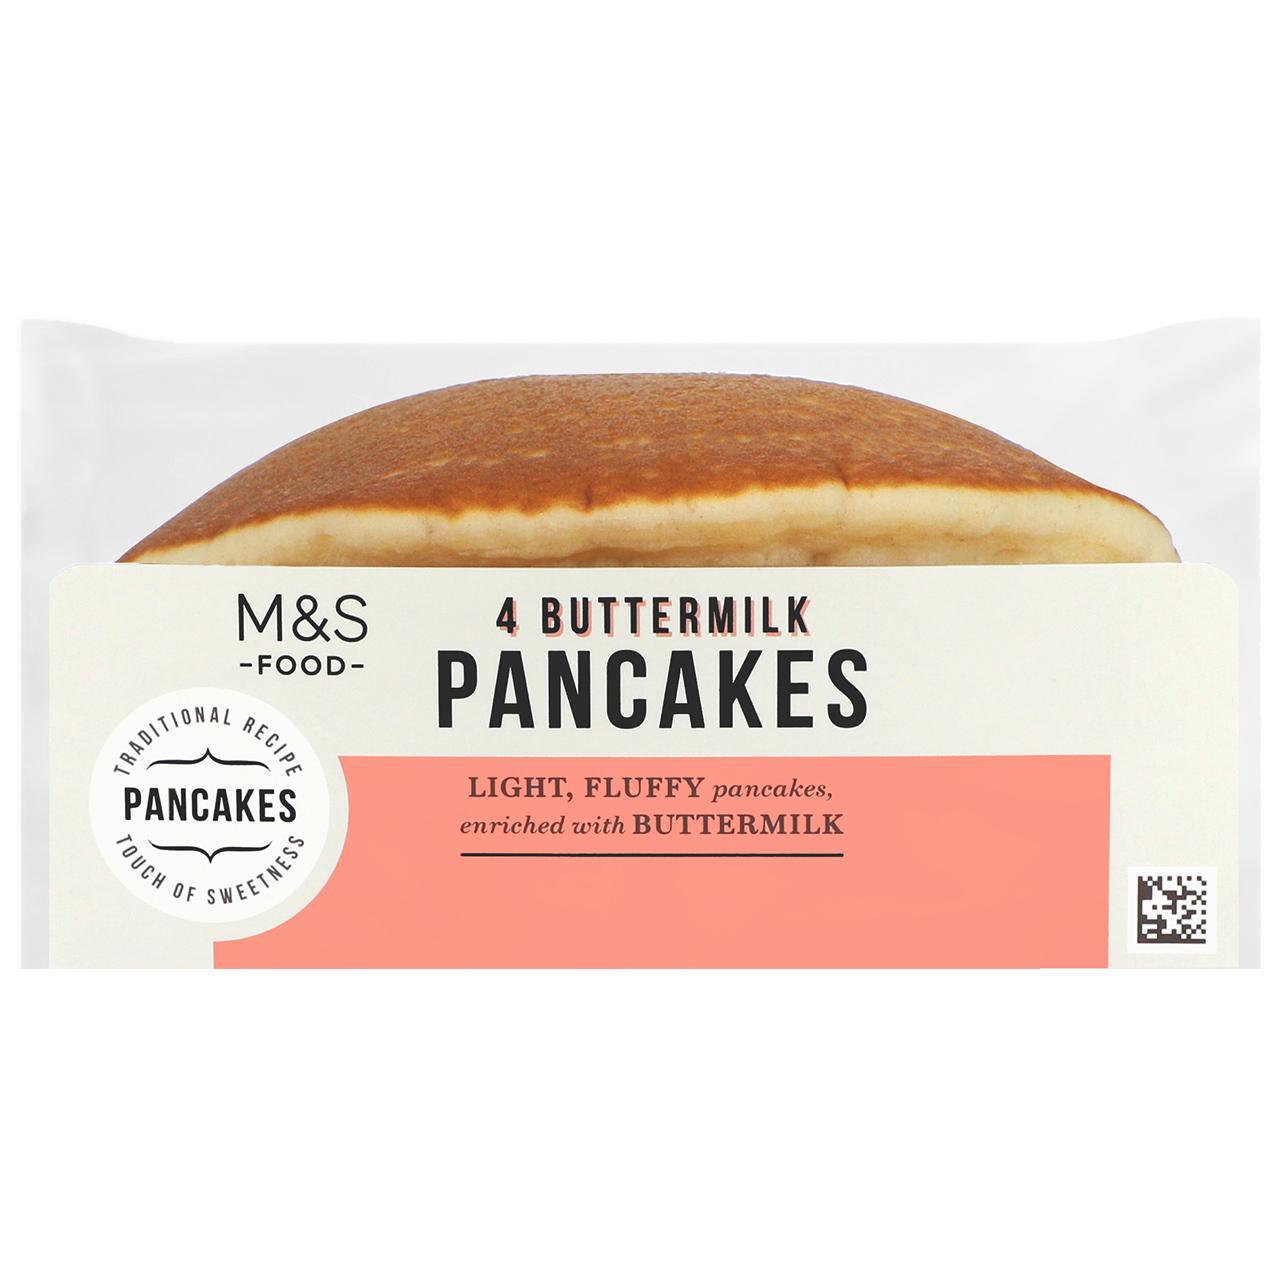 M&S Buttermilk Pancakes 4 per pack